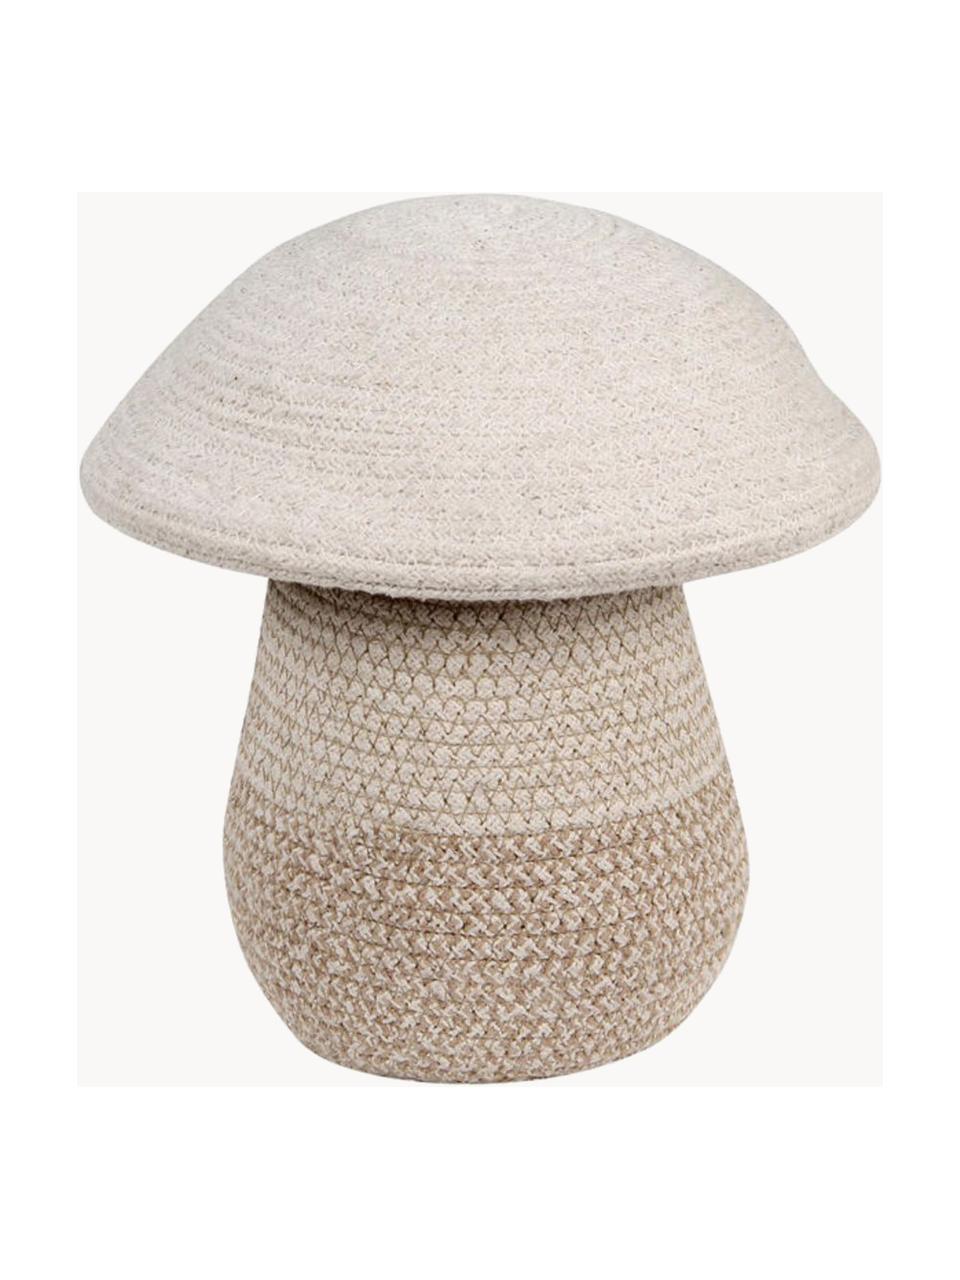 Cesta infantil artesanal Mushroom, 27 cm, 97% algodón, 3% fibra sintética, Blanco crema, tonos beige, Ø 30 x Al 27 cm